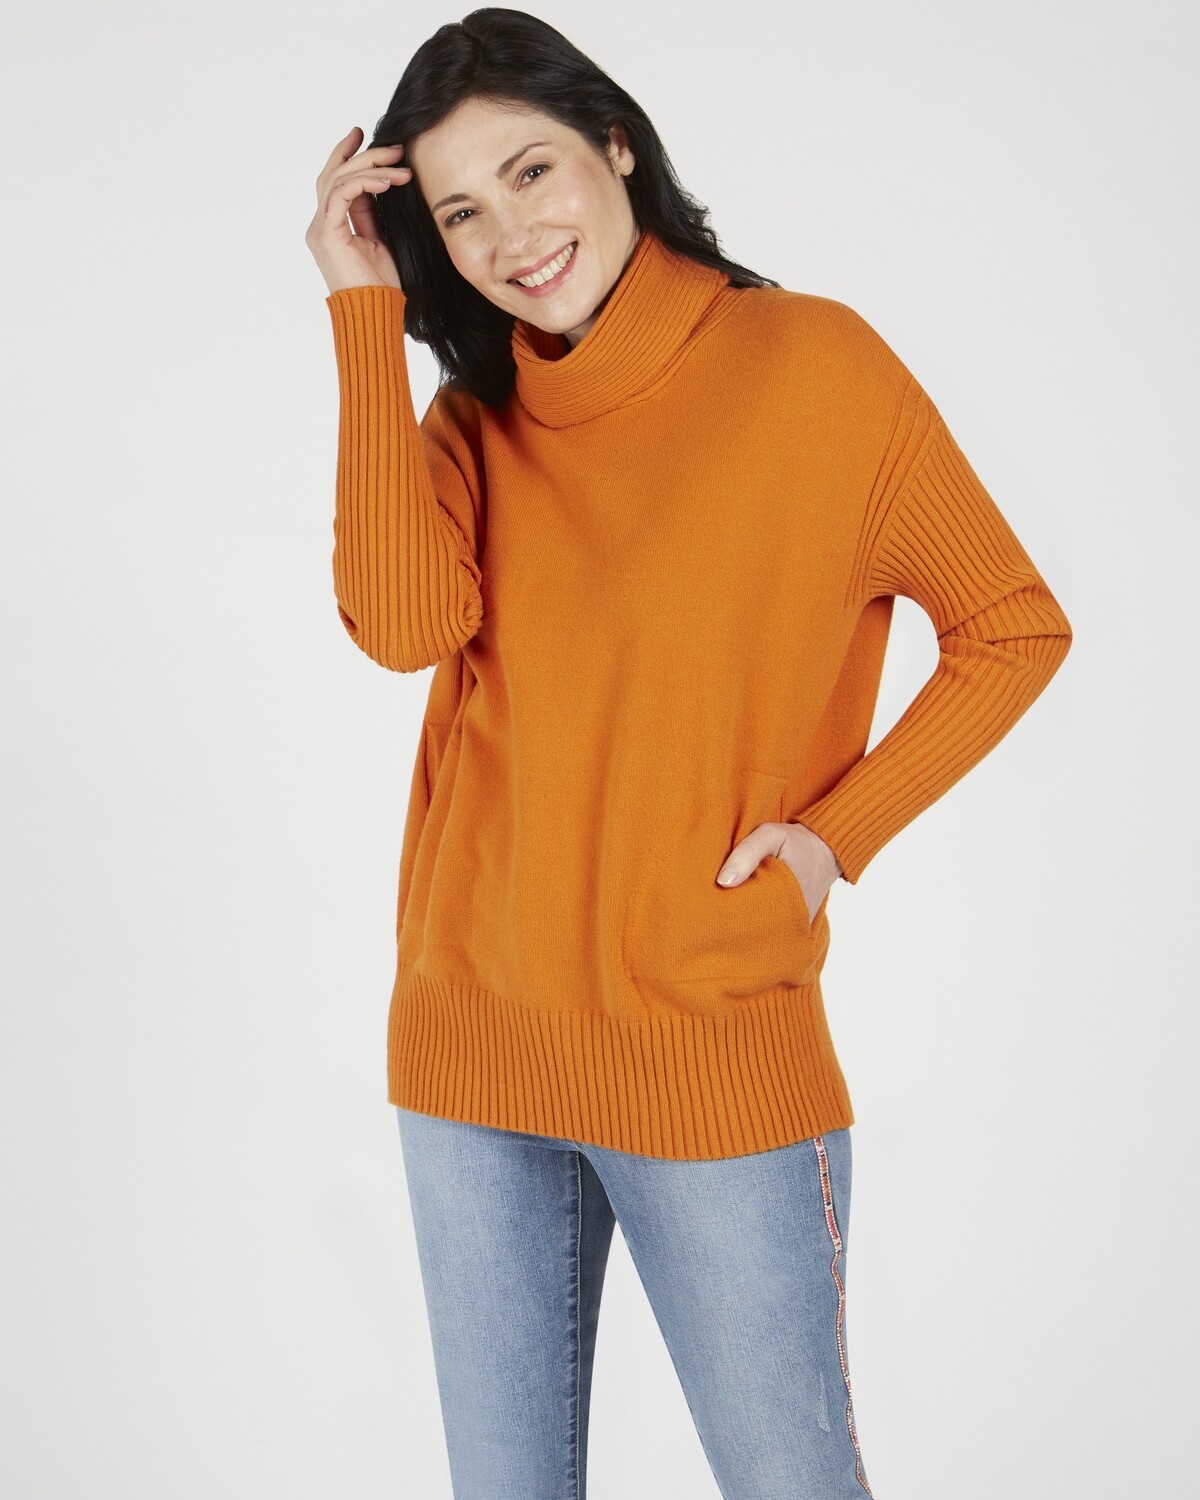 Oxford Sweater - Maple